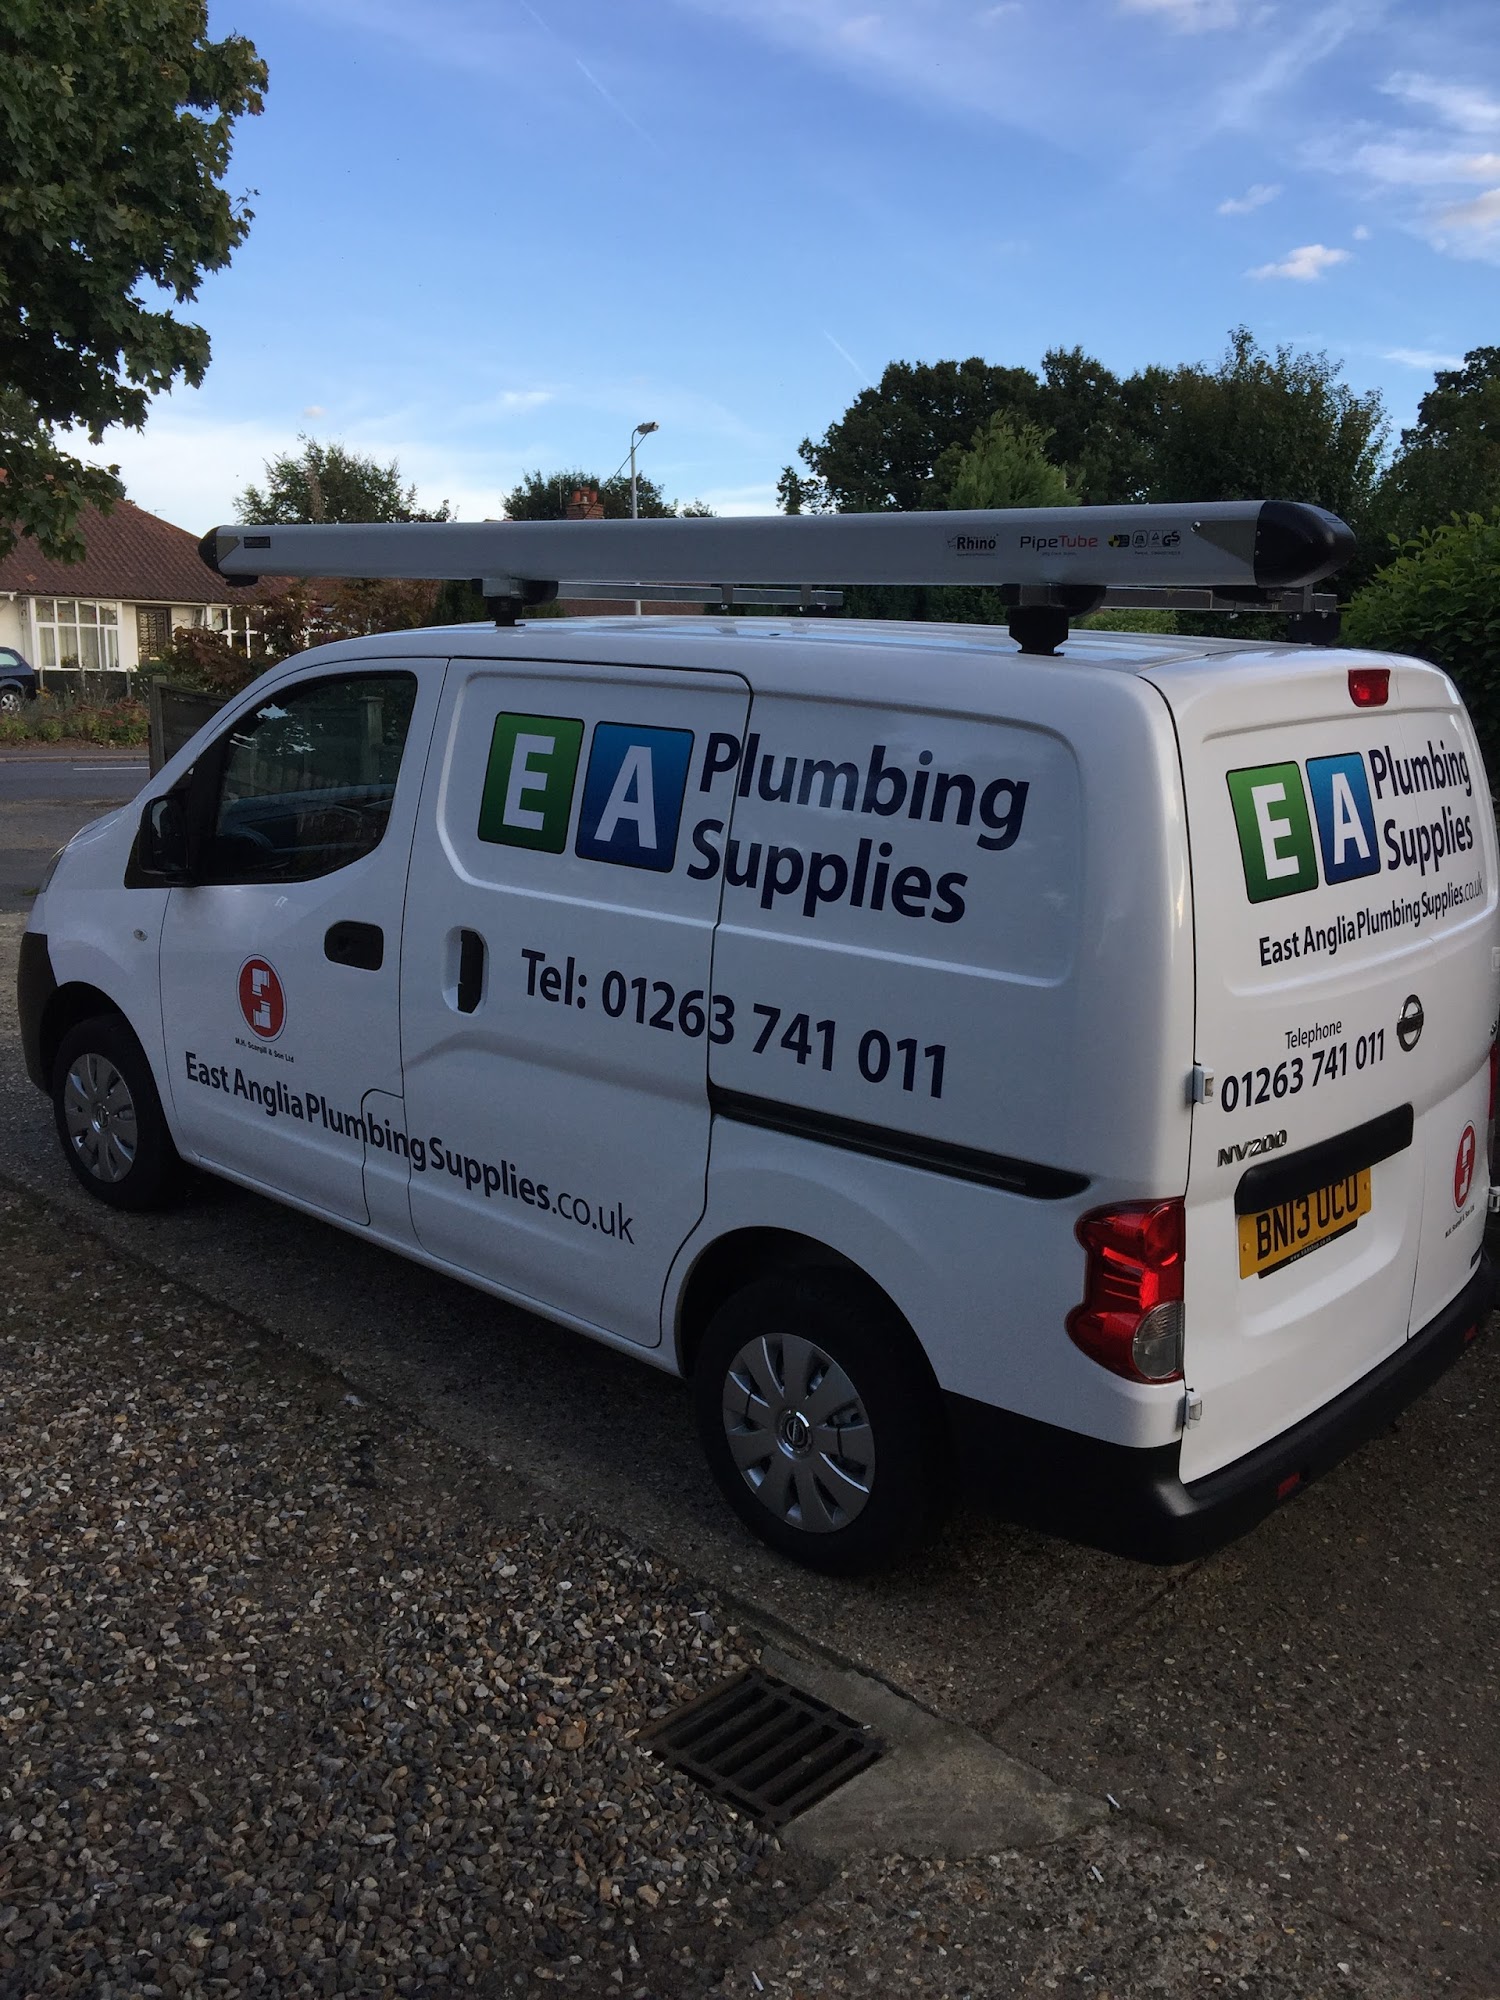 East Anglia Plumbing Supplies